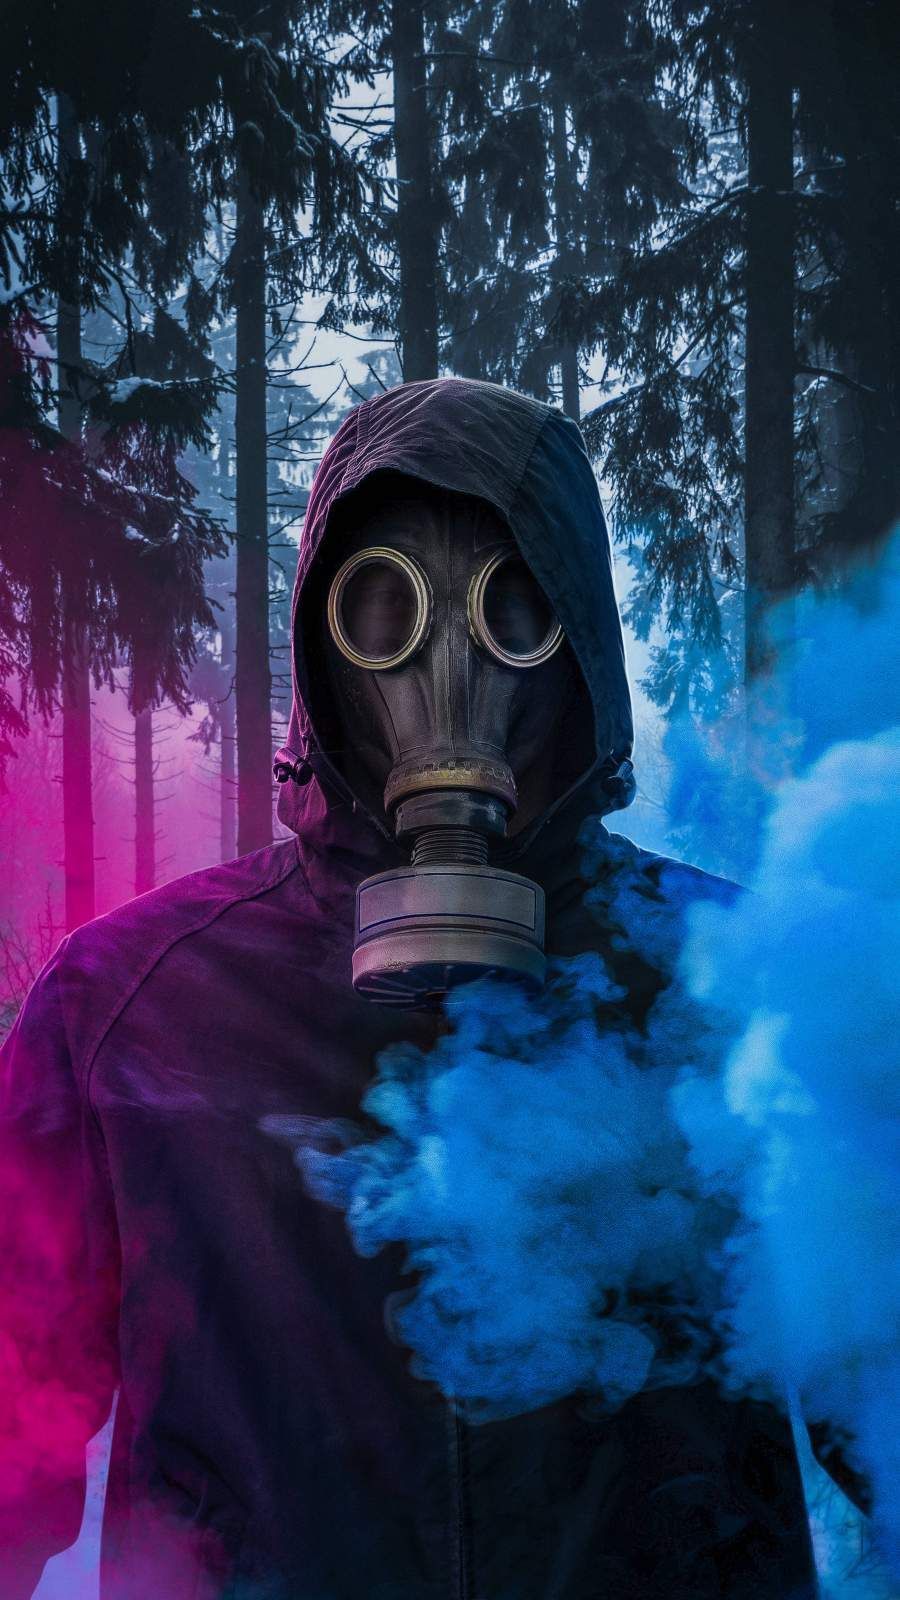 Colored Smoke Gas Mask iPhone Wallpaper .com